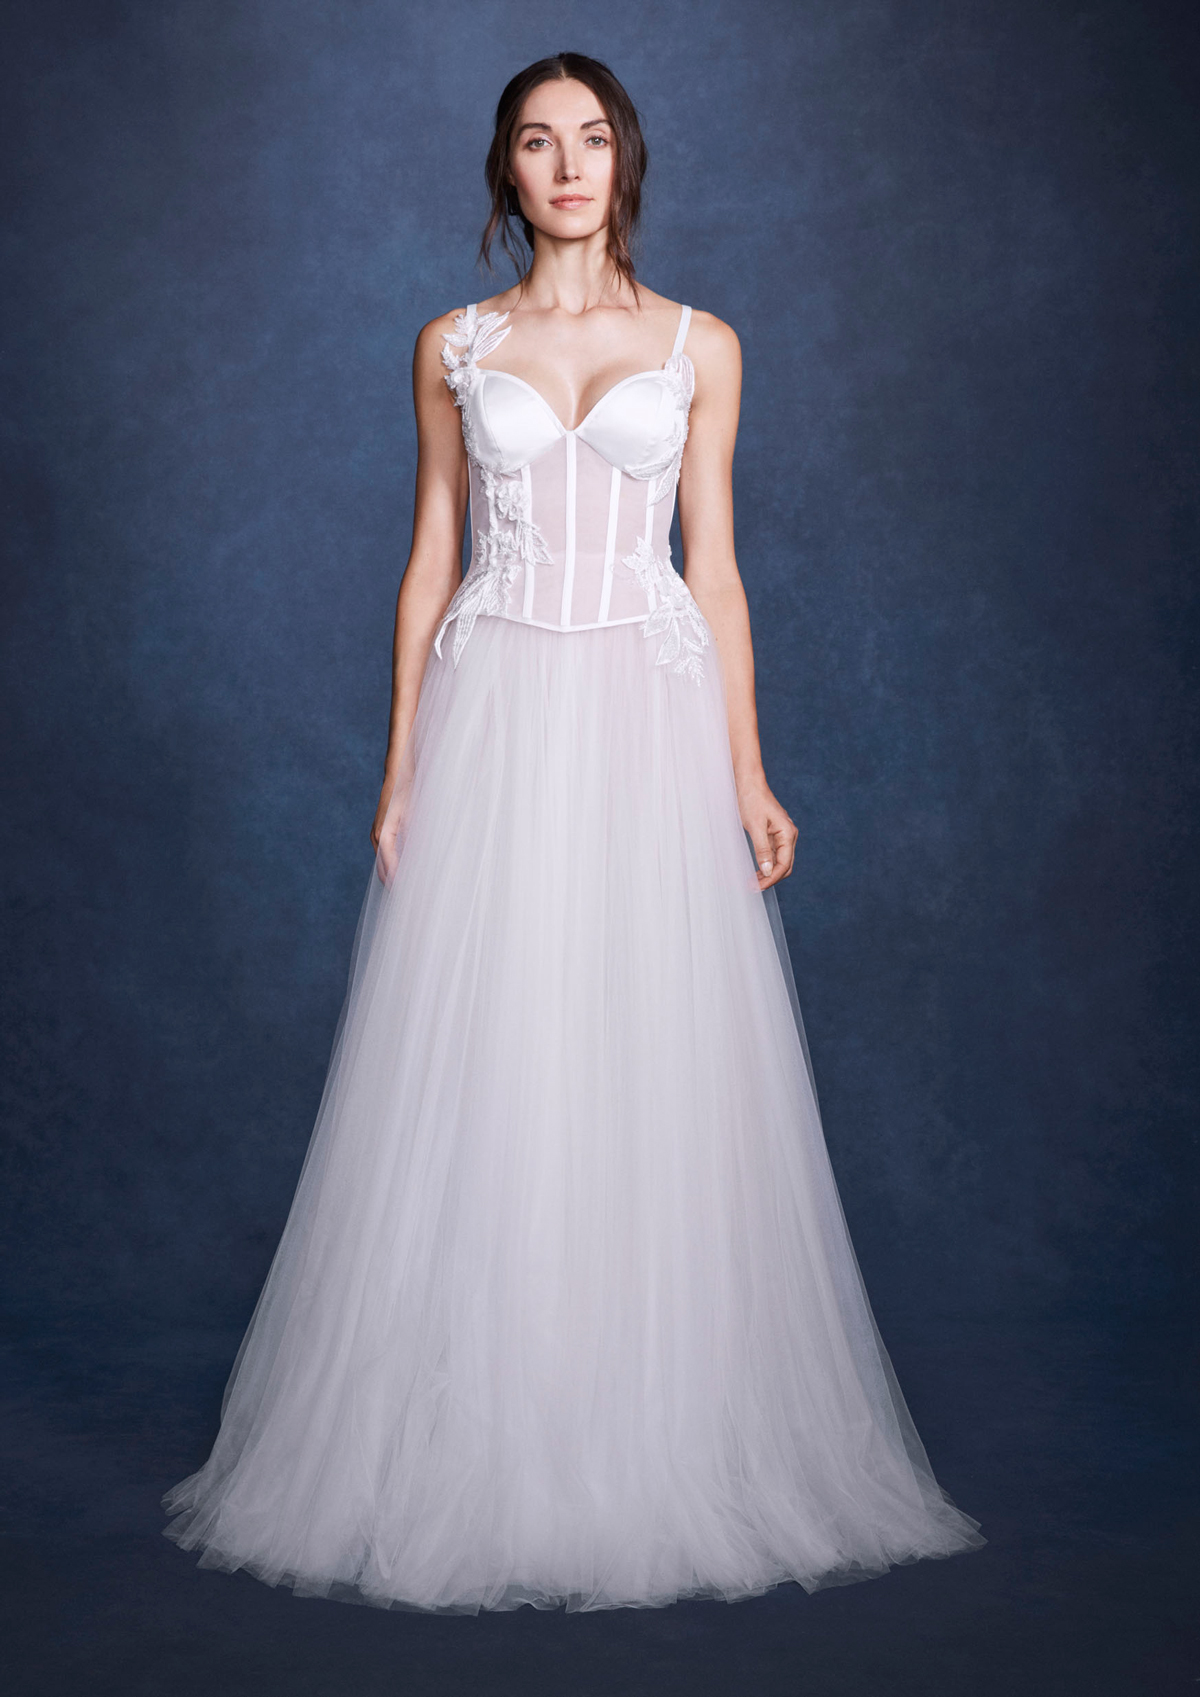 Roviera wedding dress - Verdin New York